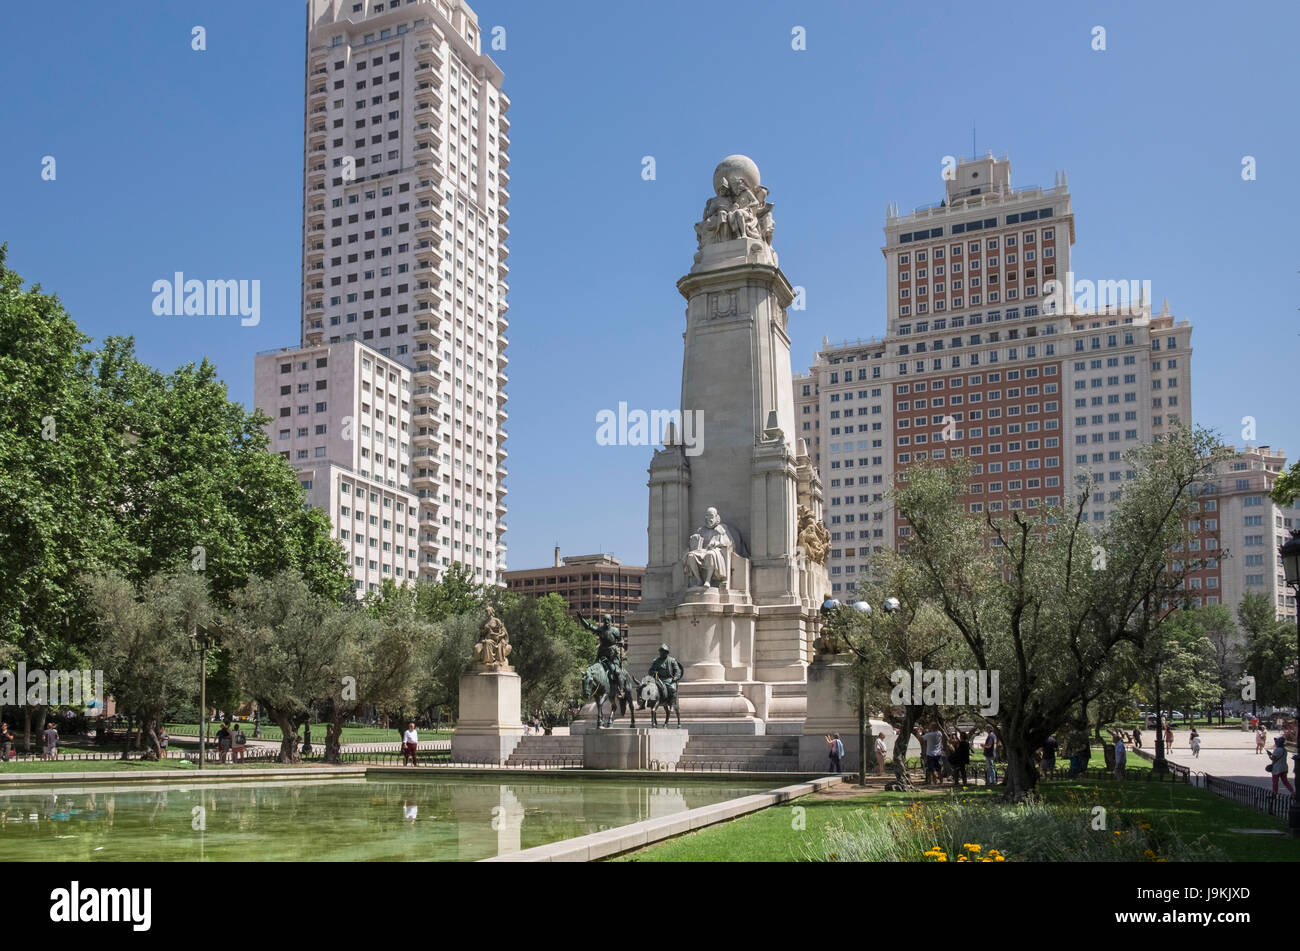 Plaza De Espana (Spain Square), with monument to Miguel de Cervantes Saavedra, Madrid, Spain Stock Photo